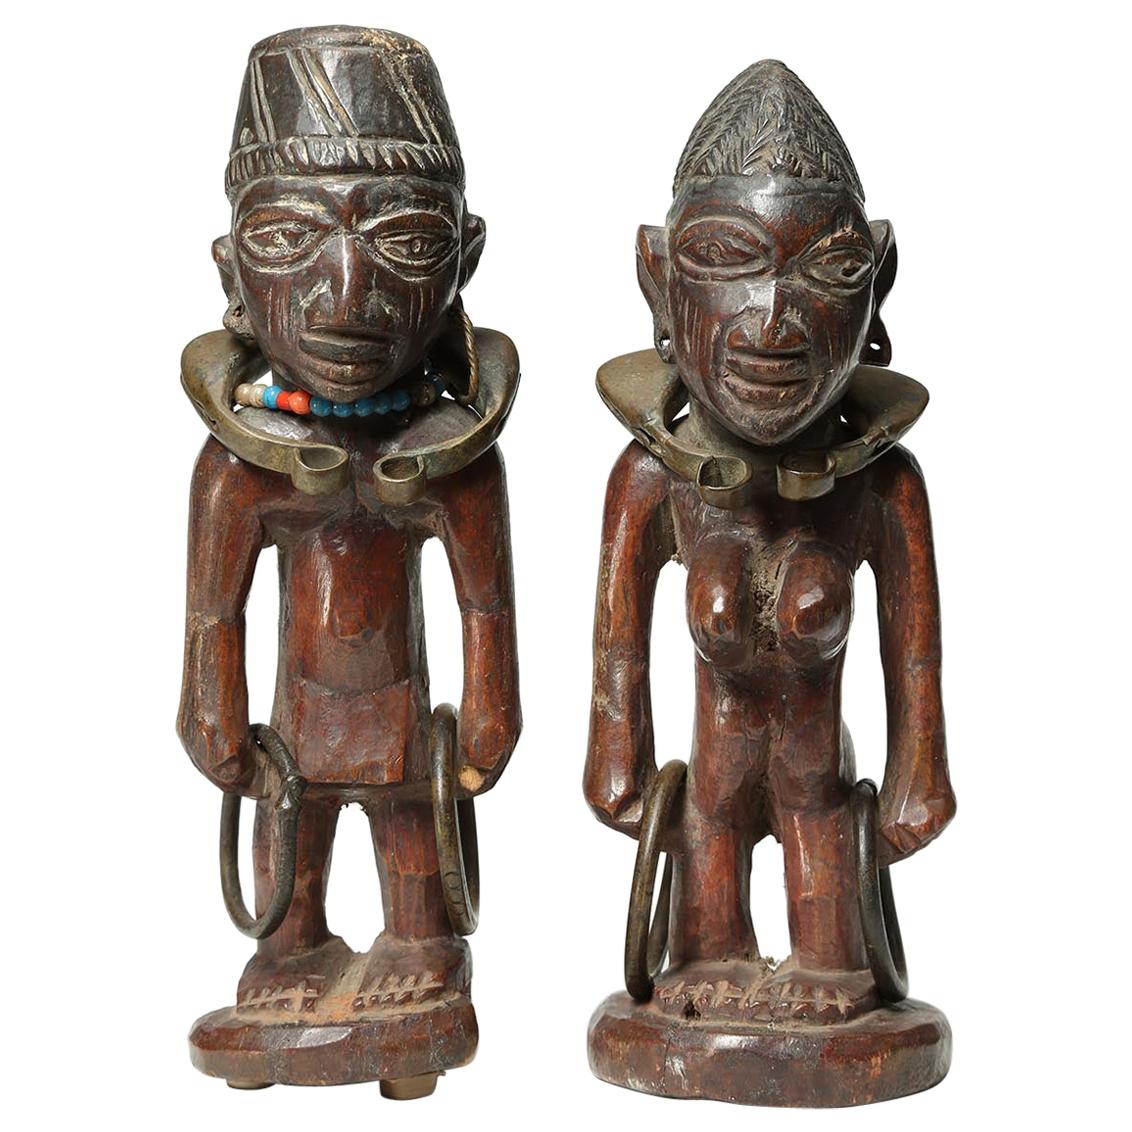 Matched Pair of Tribal Yoruba Ibeji "Twin" Figures, Male/Female with Bracelets